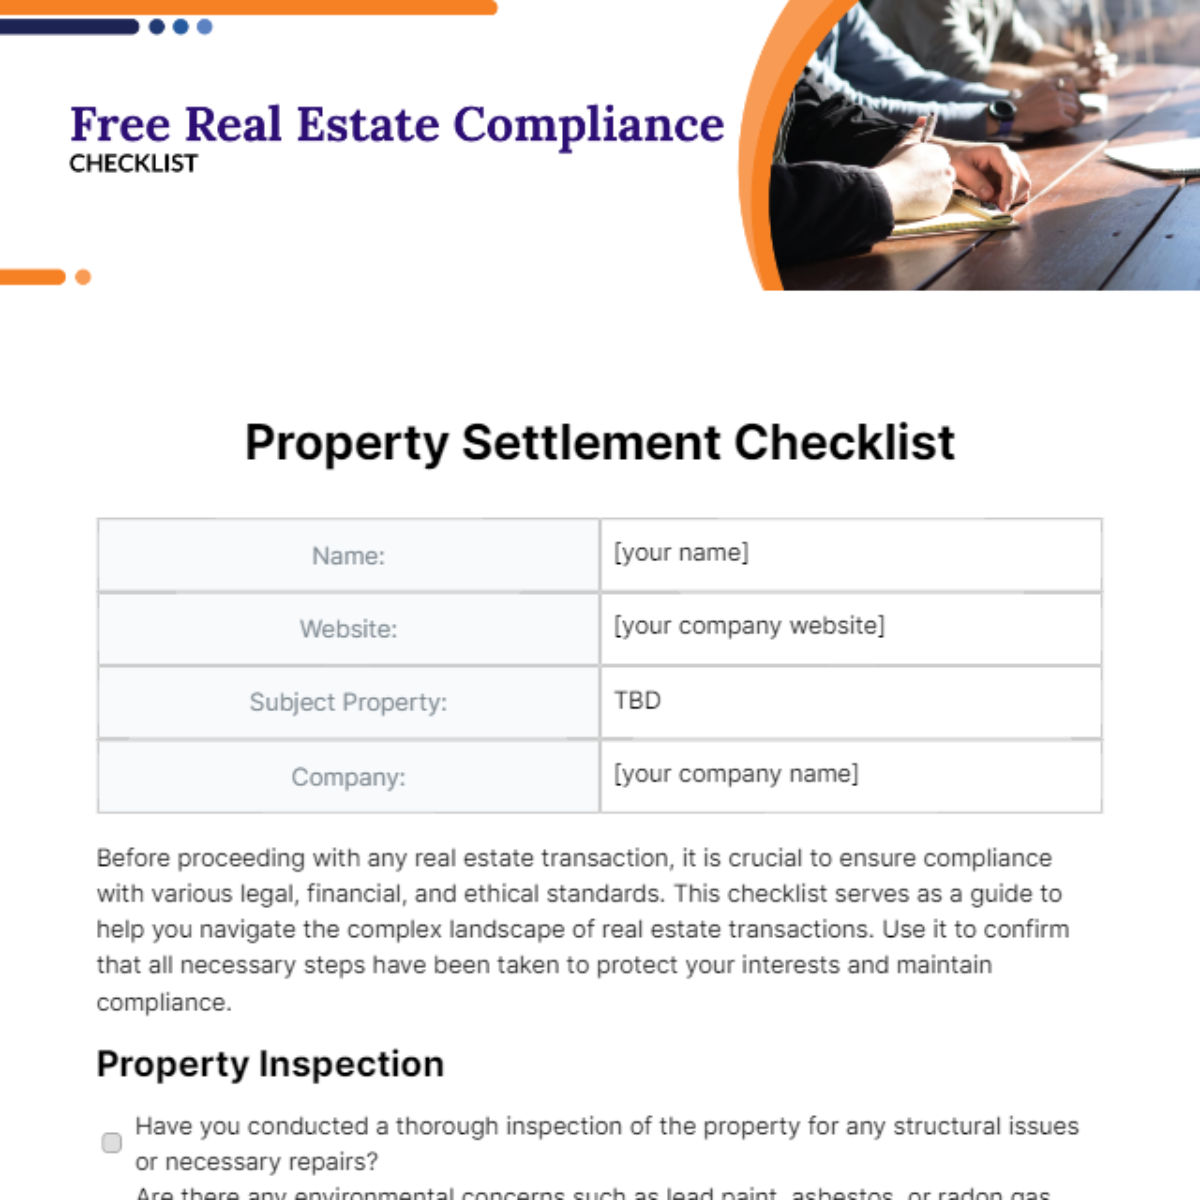 Real Estate Compliance Checklist Template